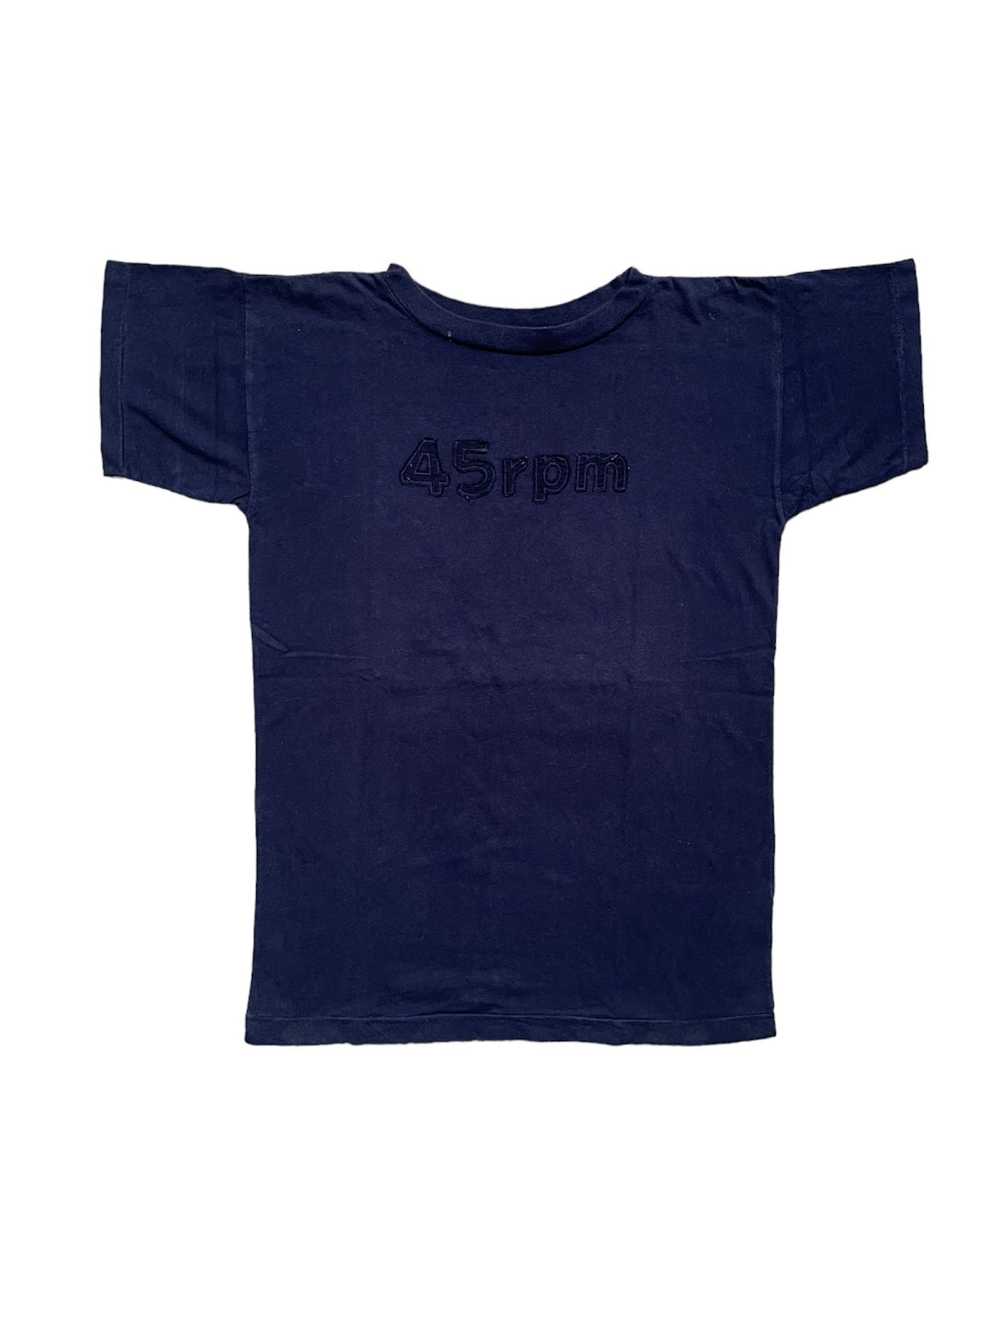 45rpm 45RPM Logo T Shirt - image 1